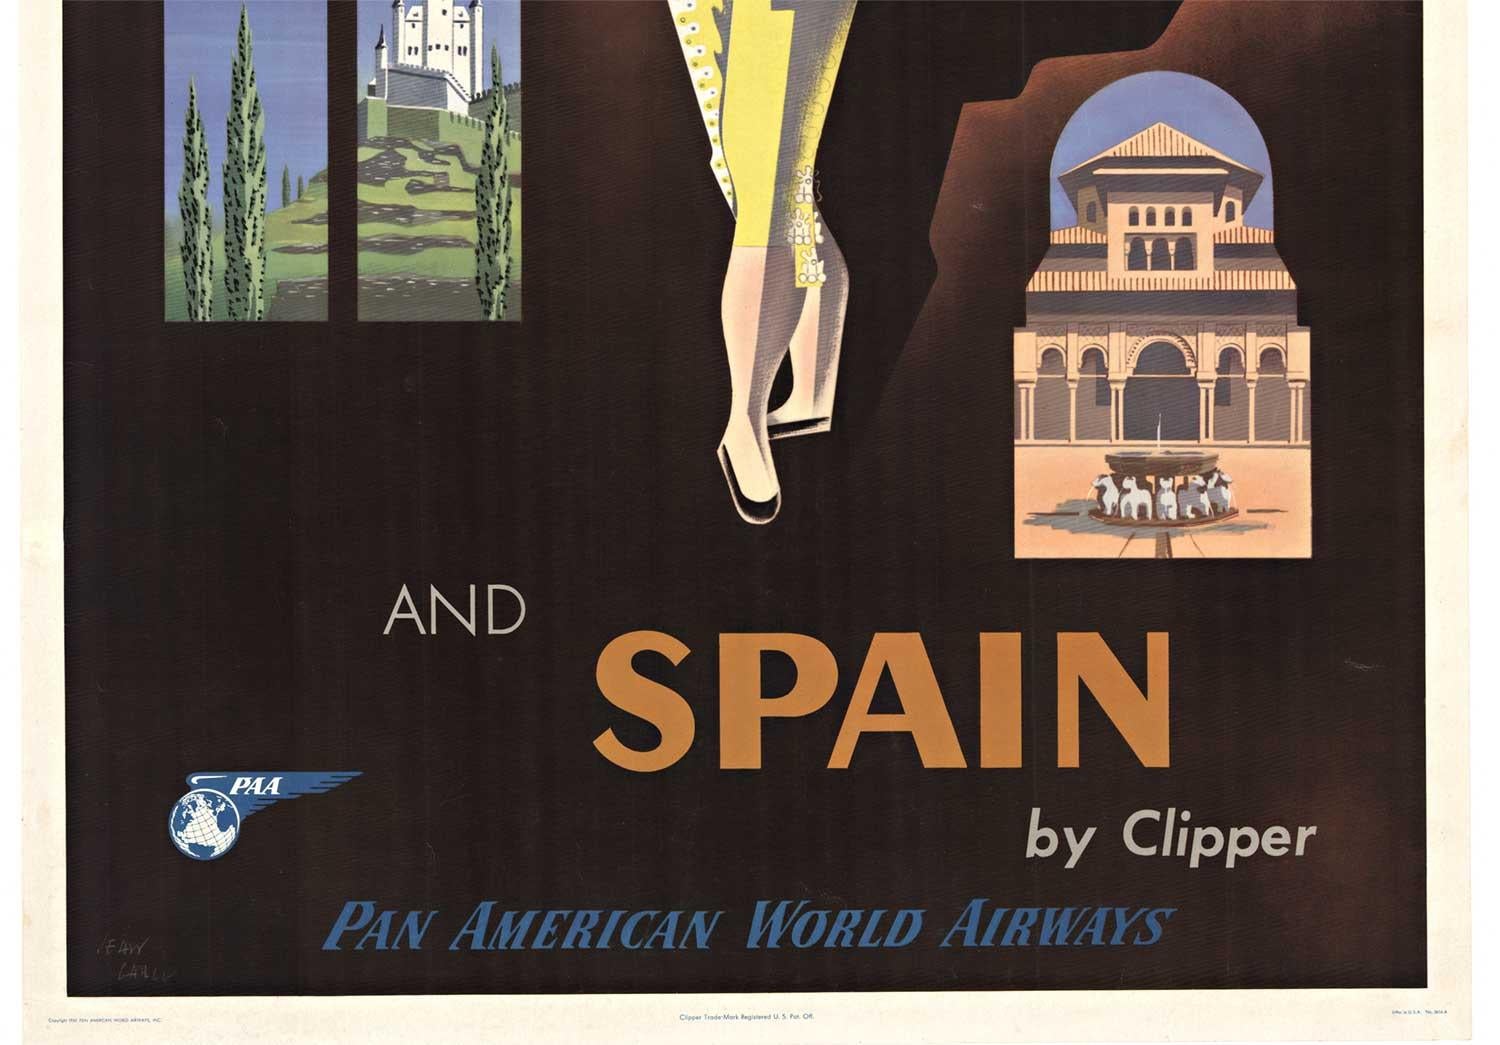 Affiche originale d'Pan American World Airways par Clipper to Portugal and Spain - Modernisme américain Print par Jean Carlu